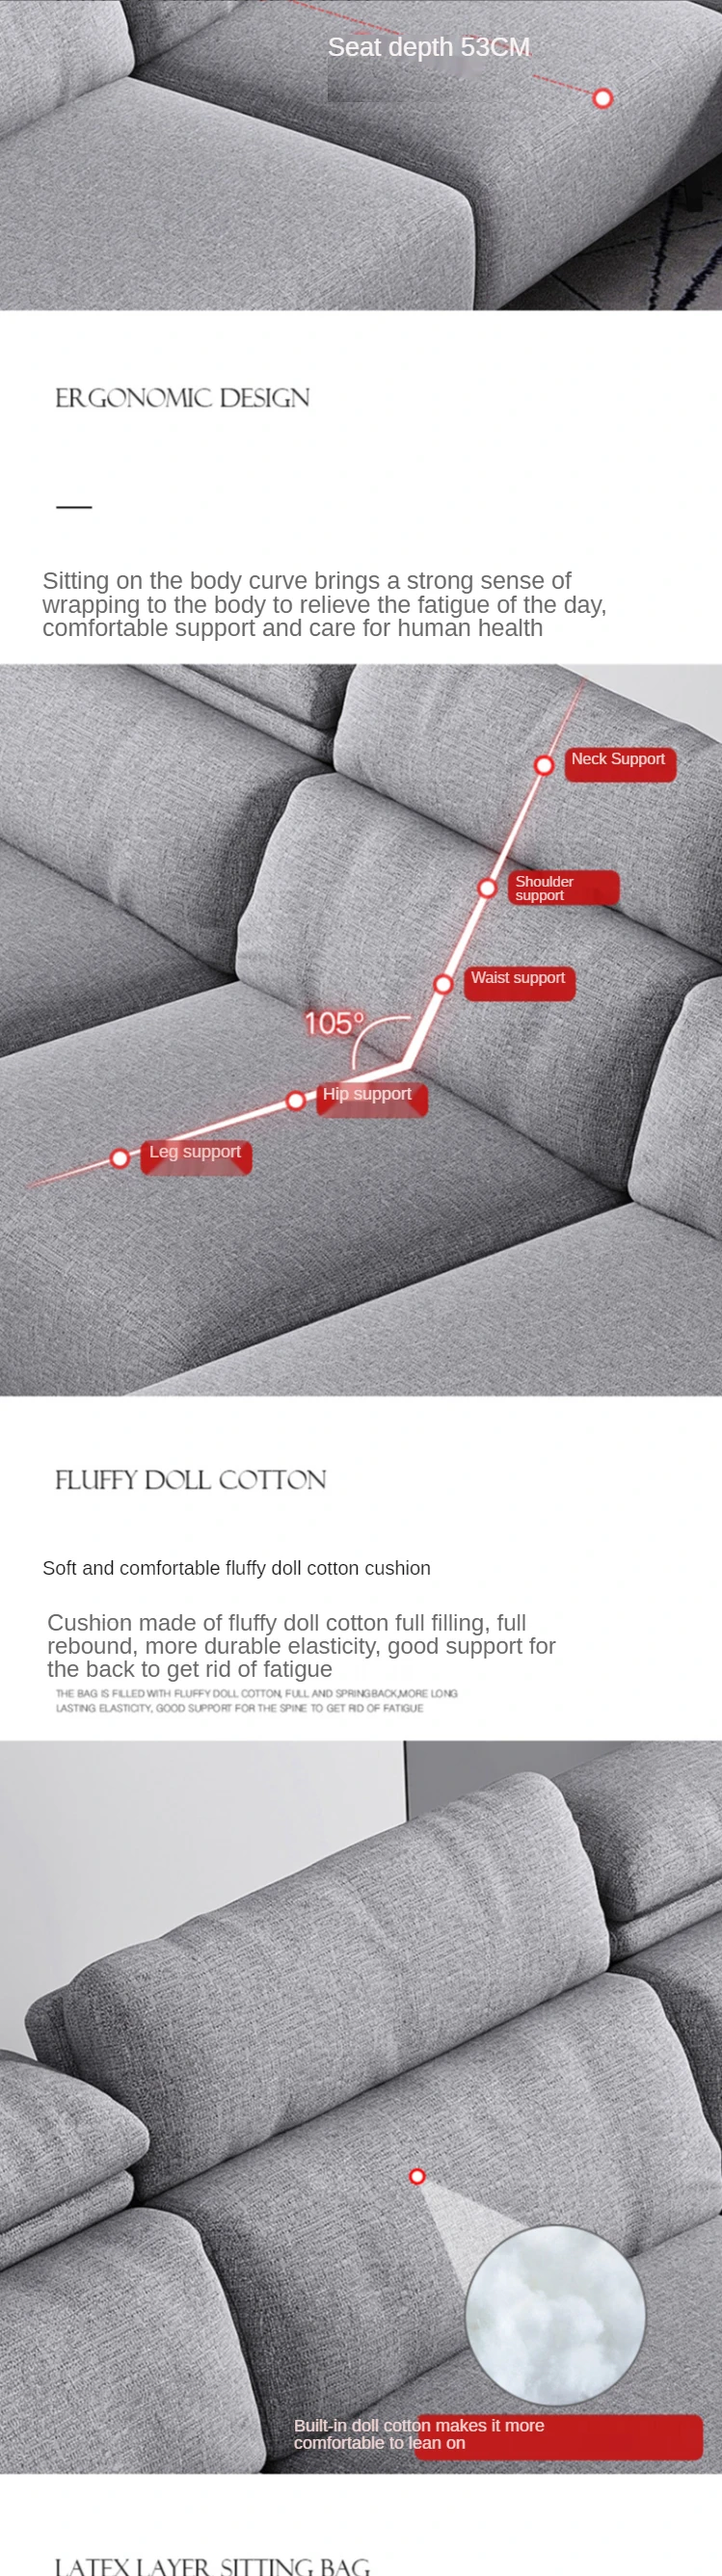 L Shaped Modern Designs American Style Ser Fabric Sofa